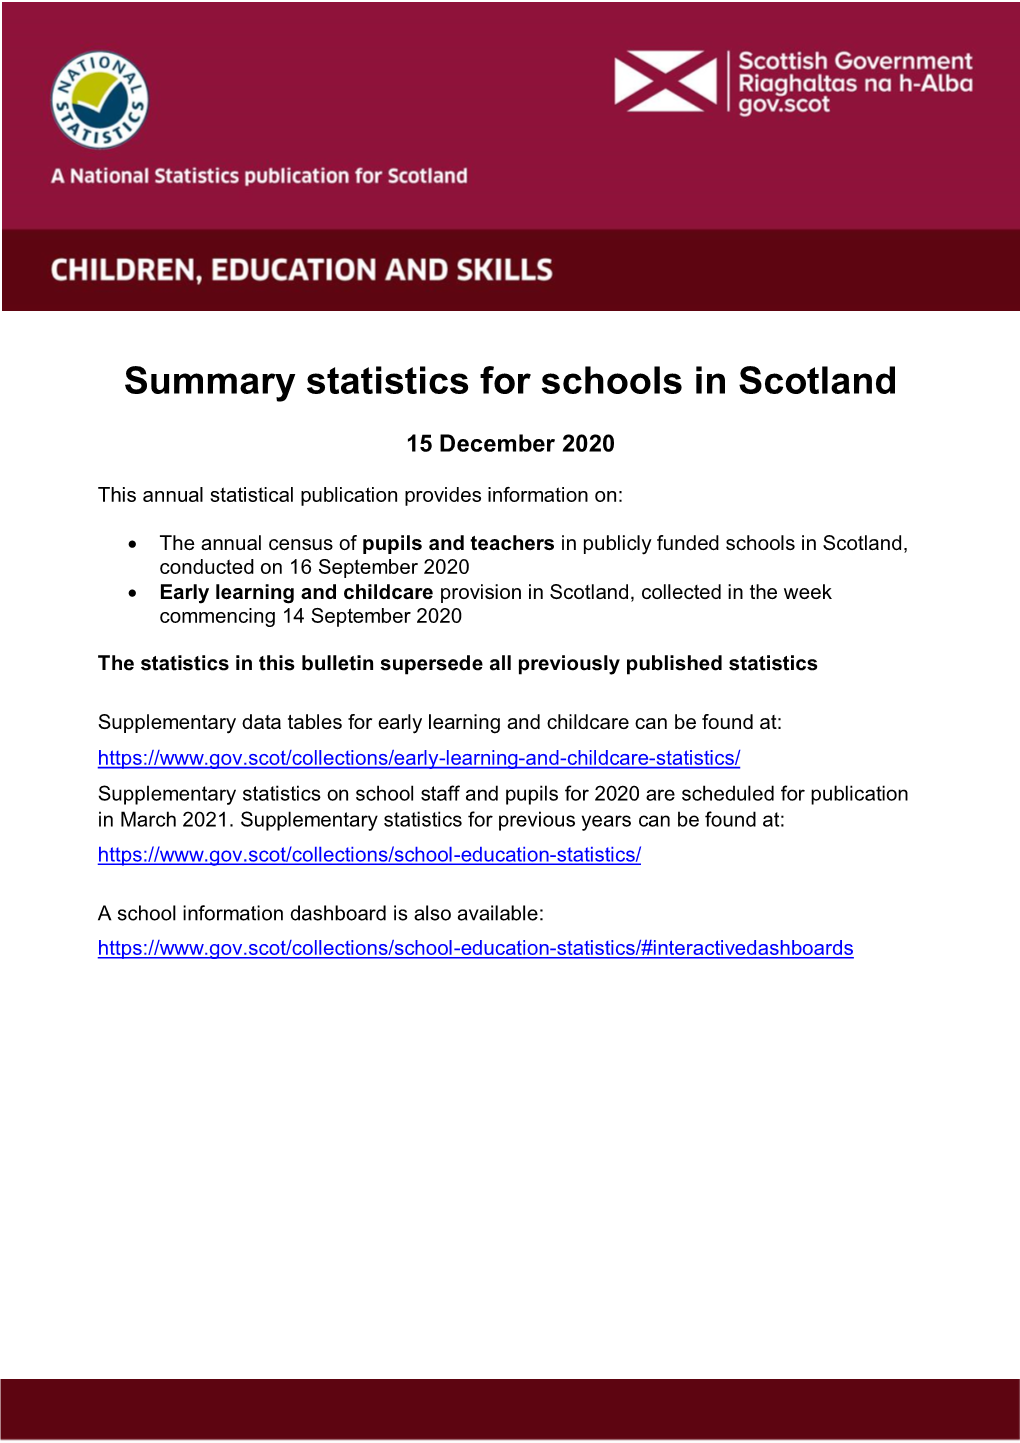 Summary Statistics for Schools in Scotland (